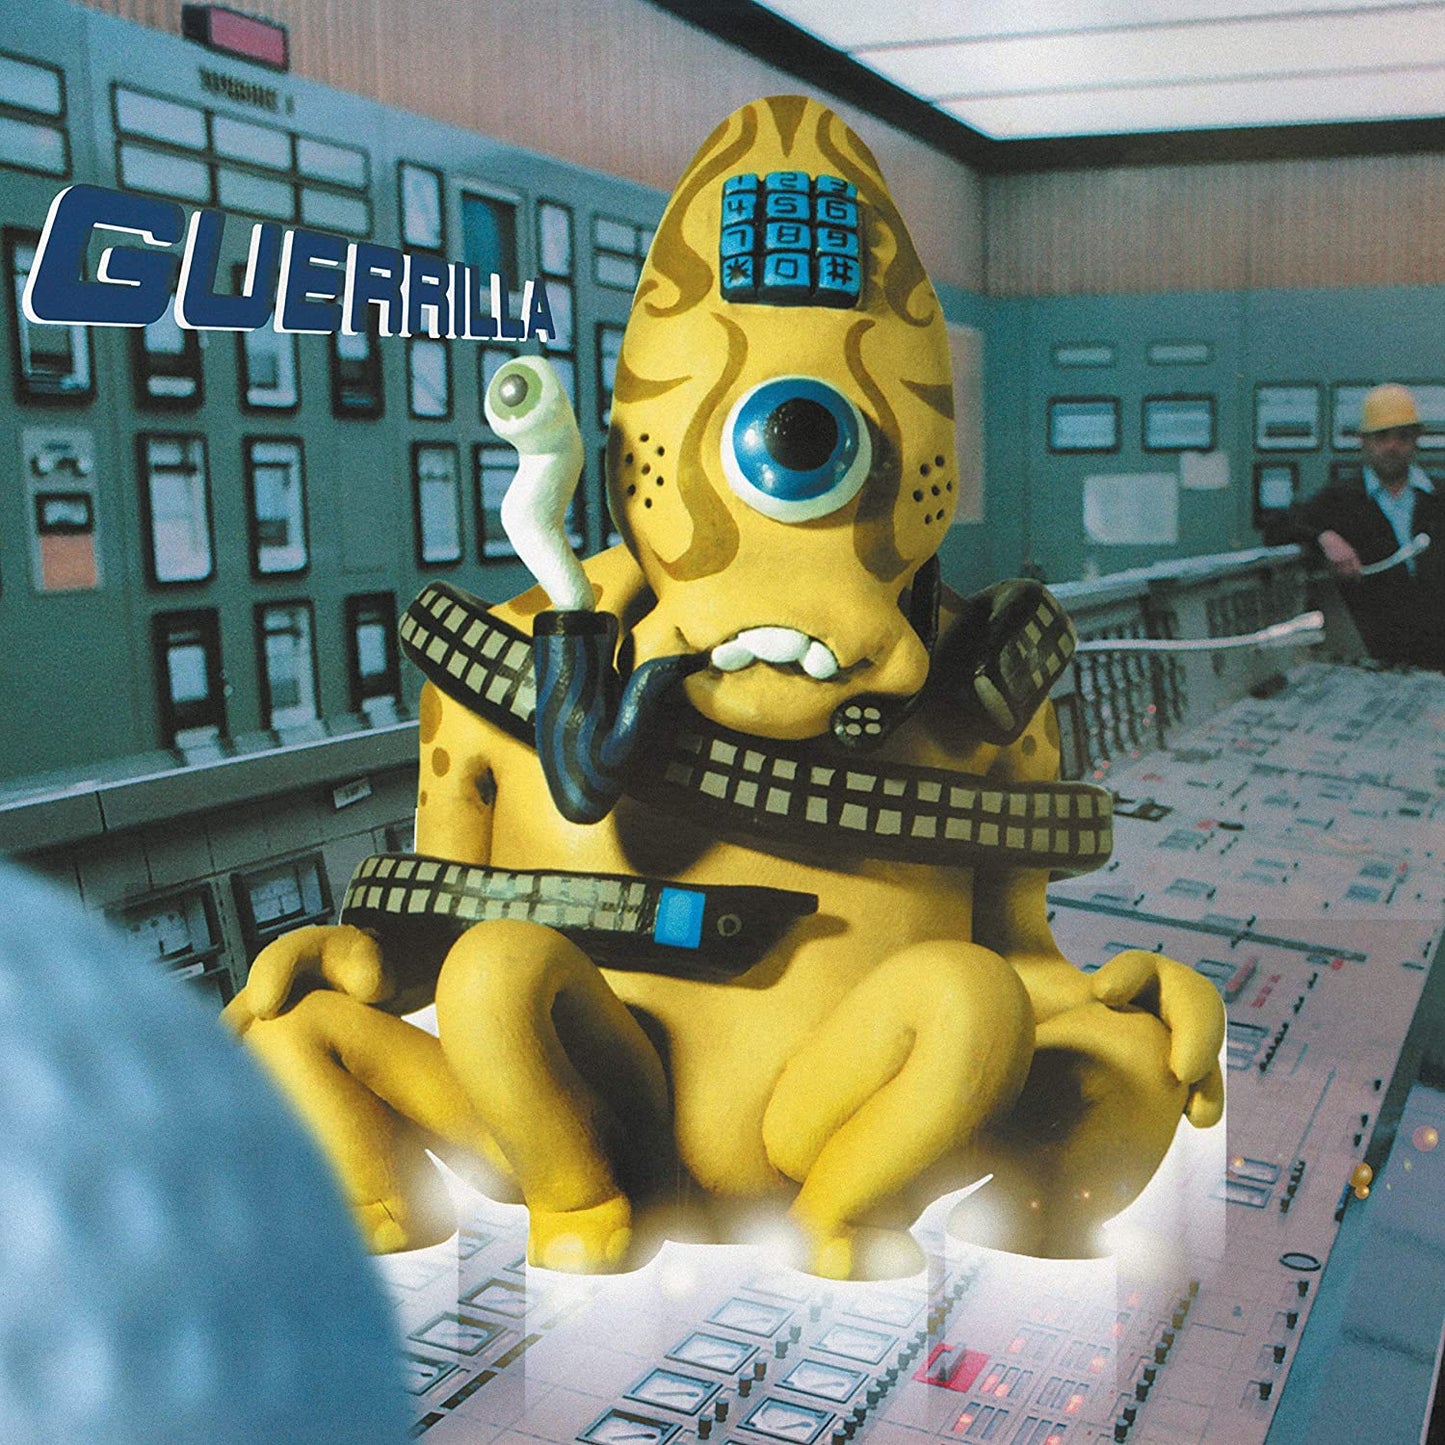 3rd studio album on Vinyl by The Super Furry Animals, originally released in June 1999